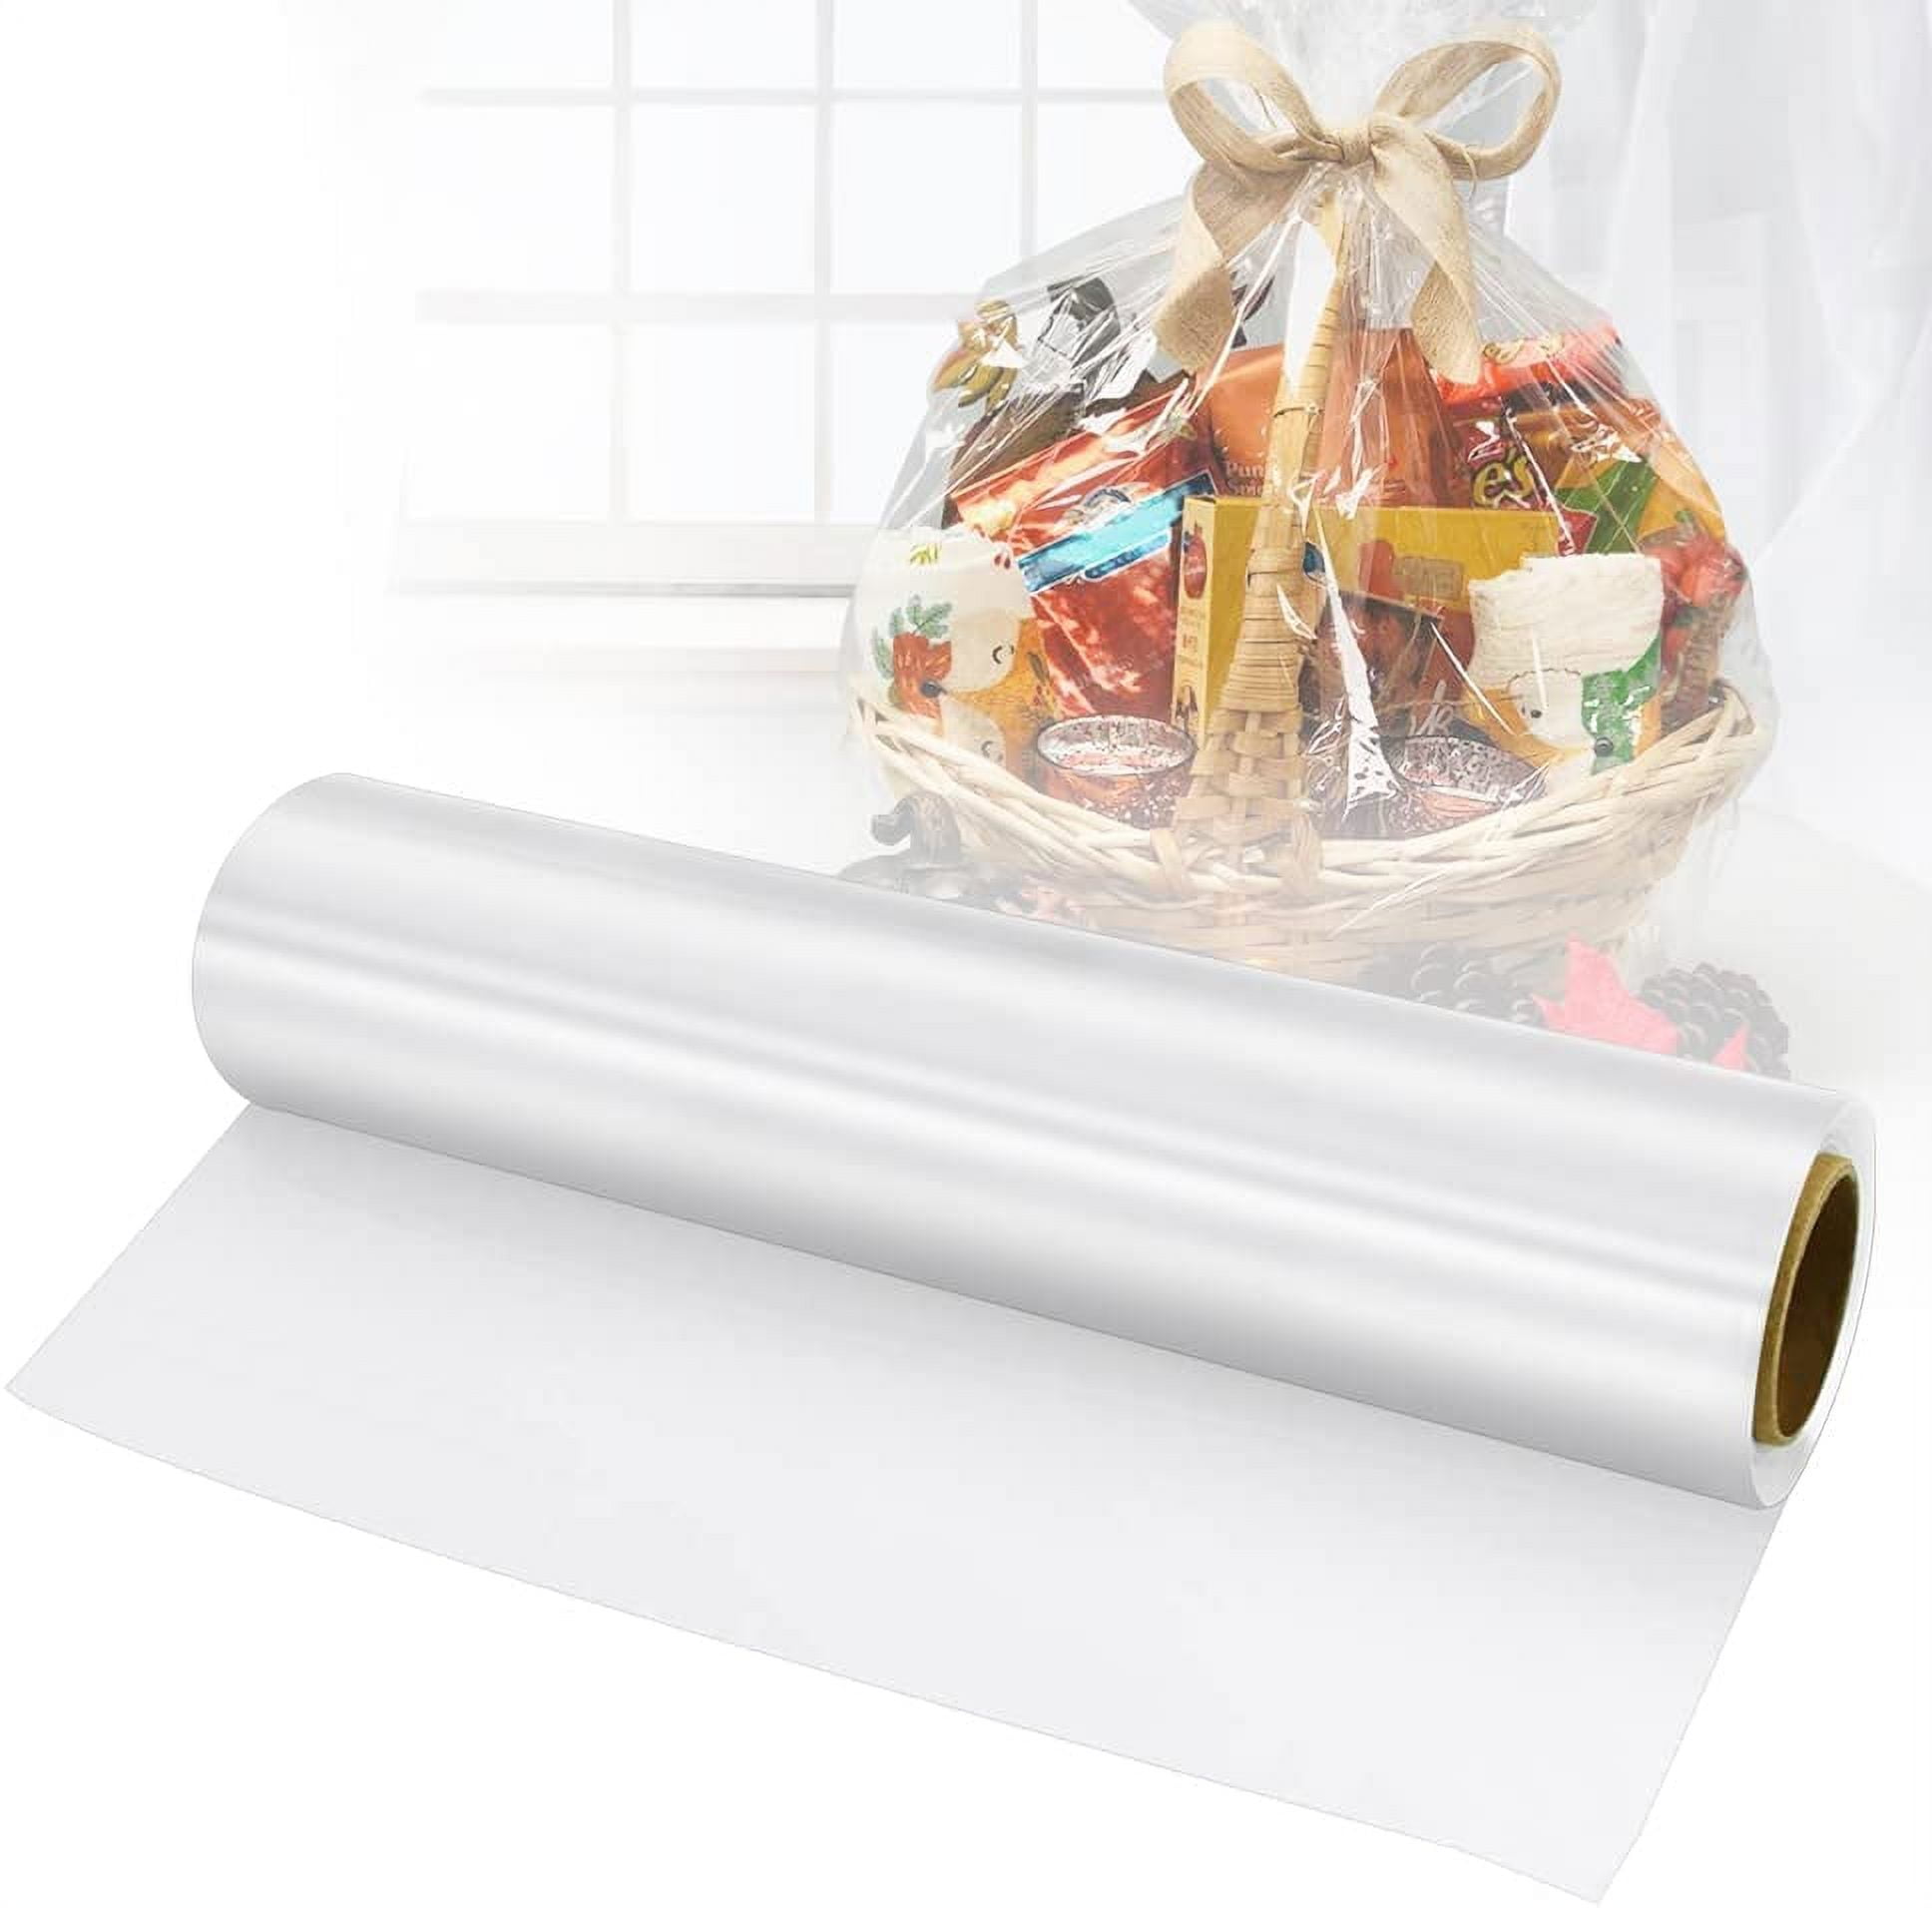 100 Ct Mylar Foil Sheets For Gift Wrapping Gift Basket Filler - 20